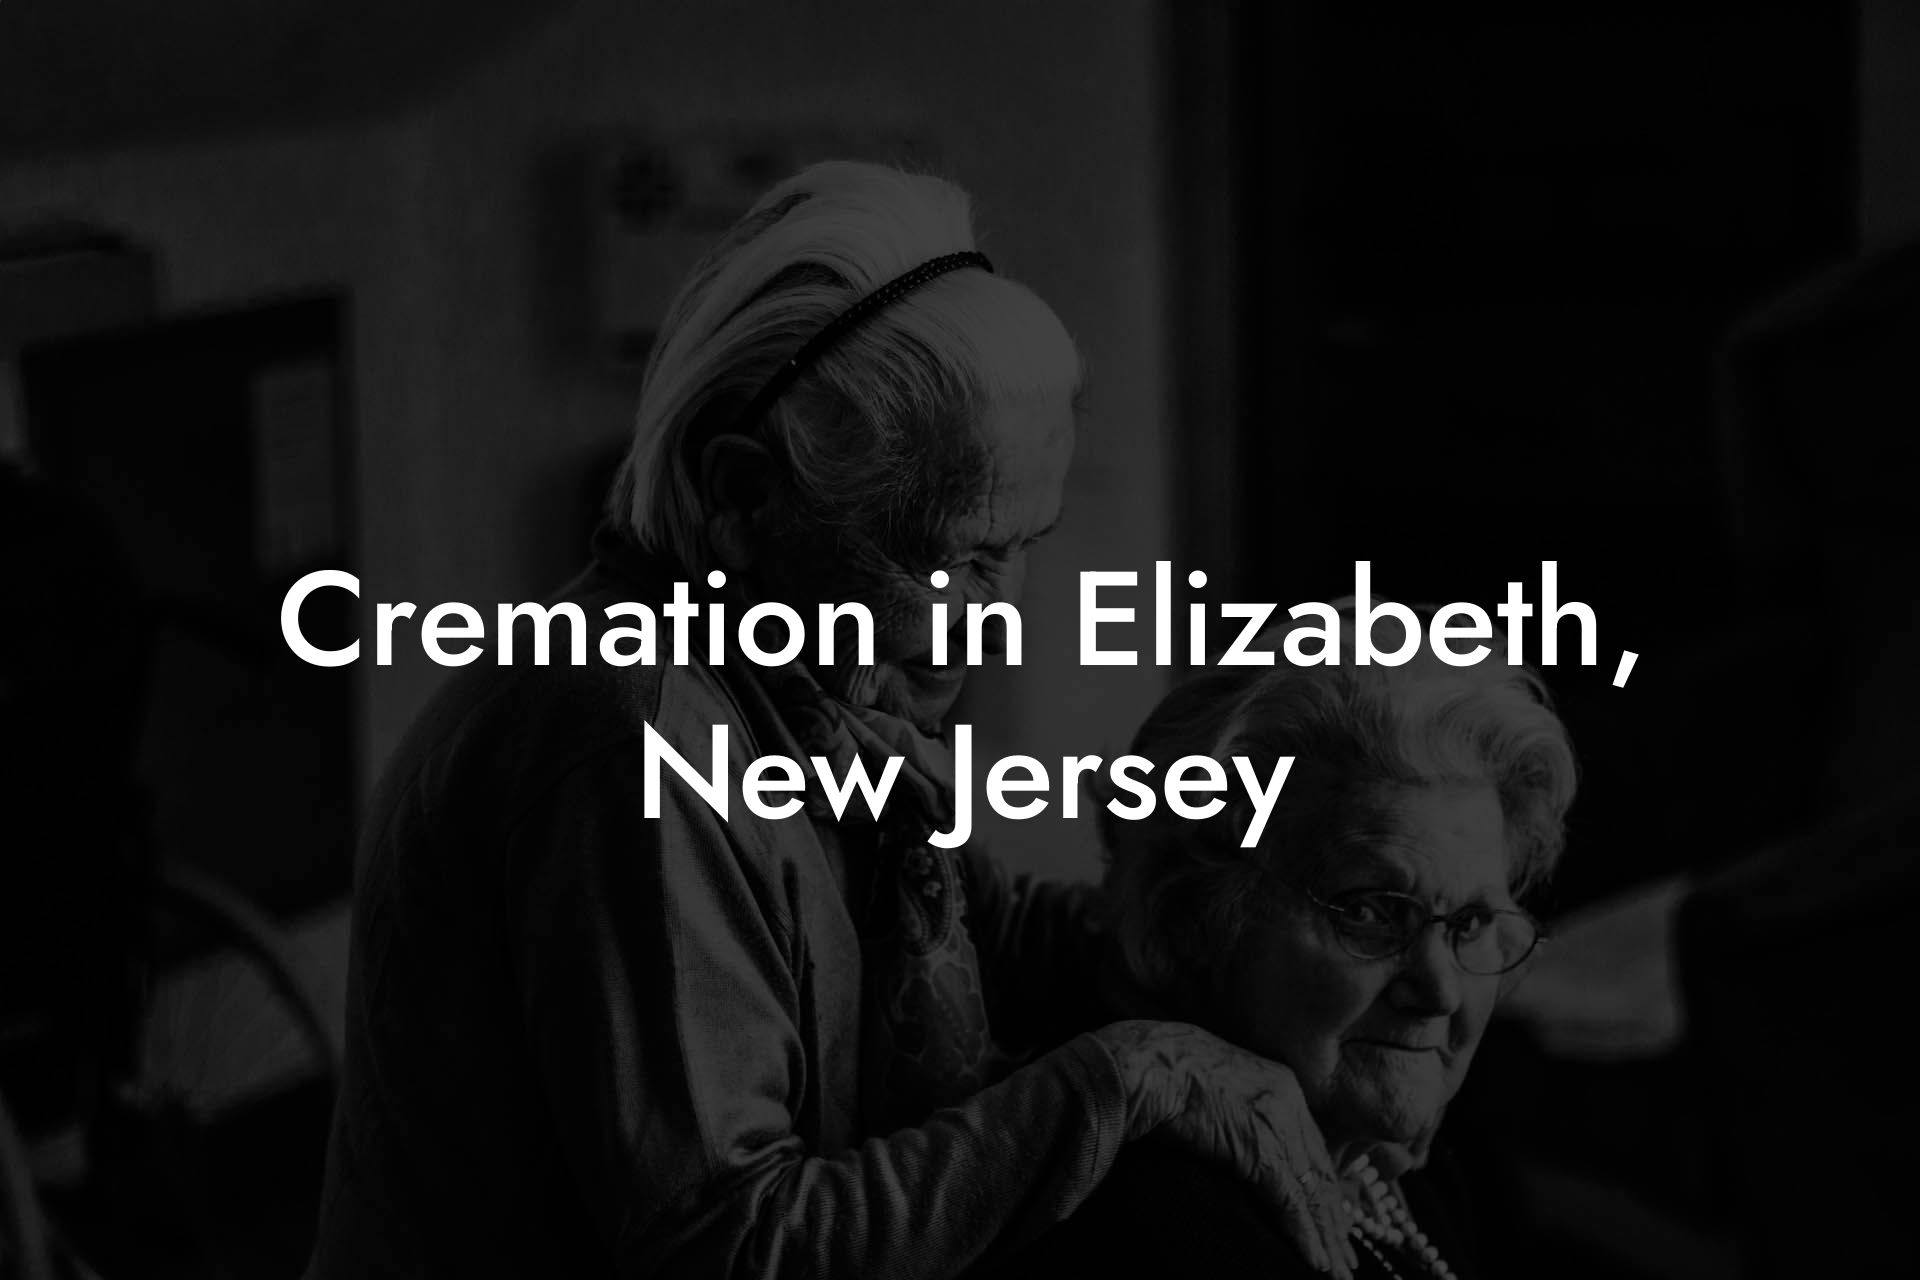 Cremation in Elizabeth, New Jersey